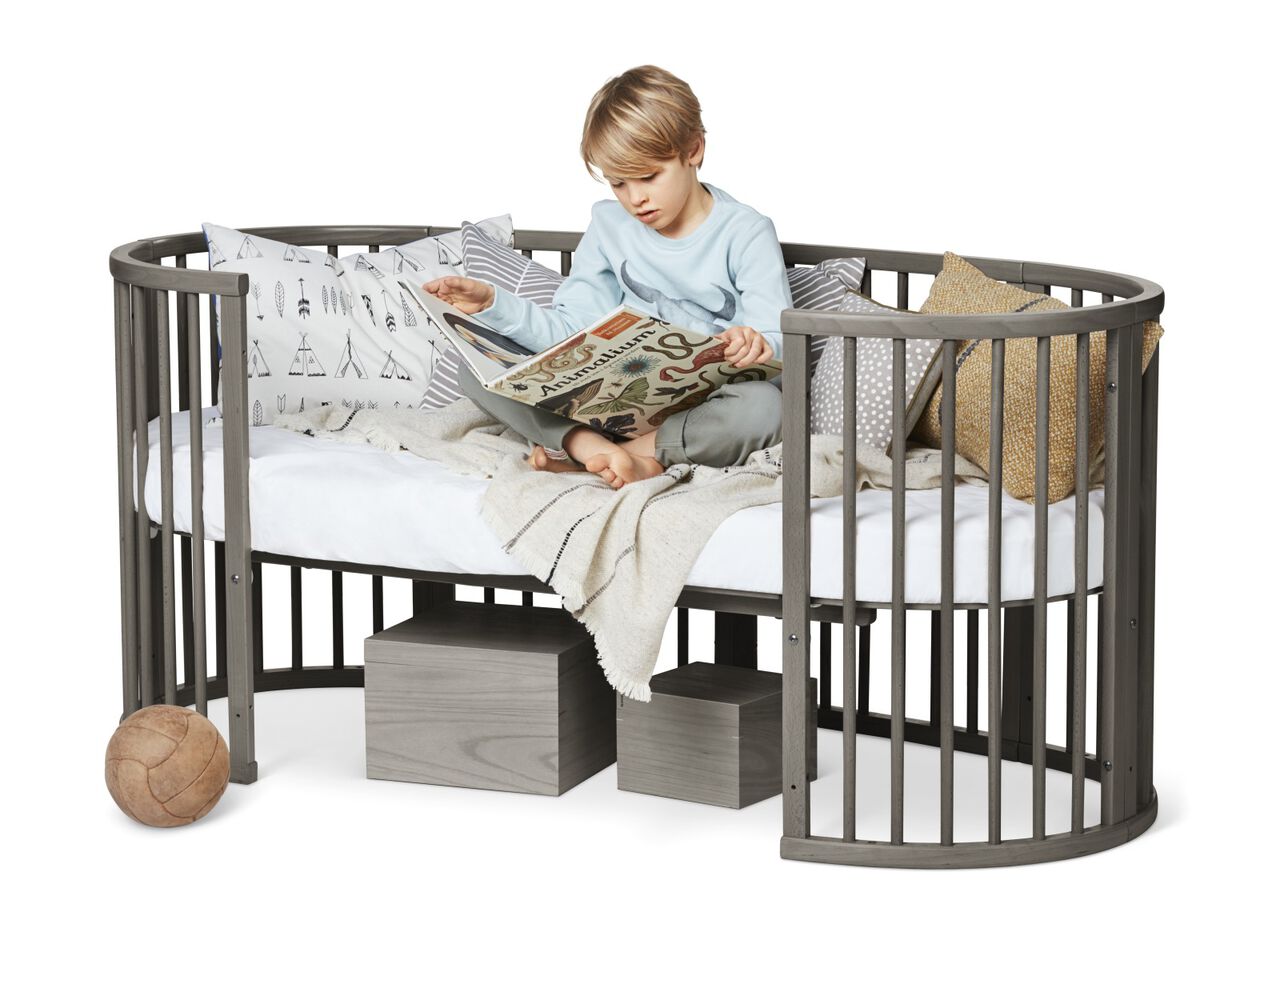 stokke crib mattress recall